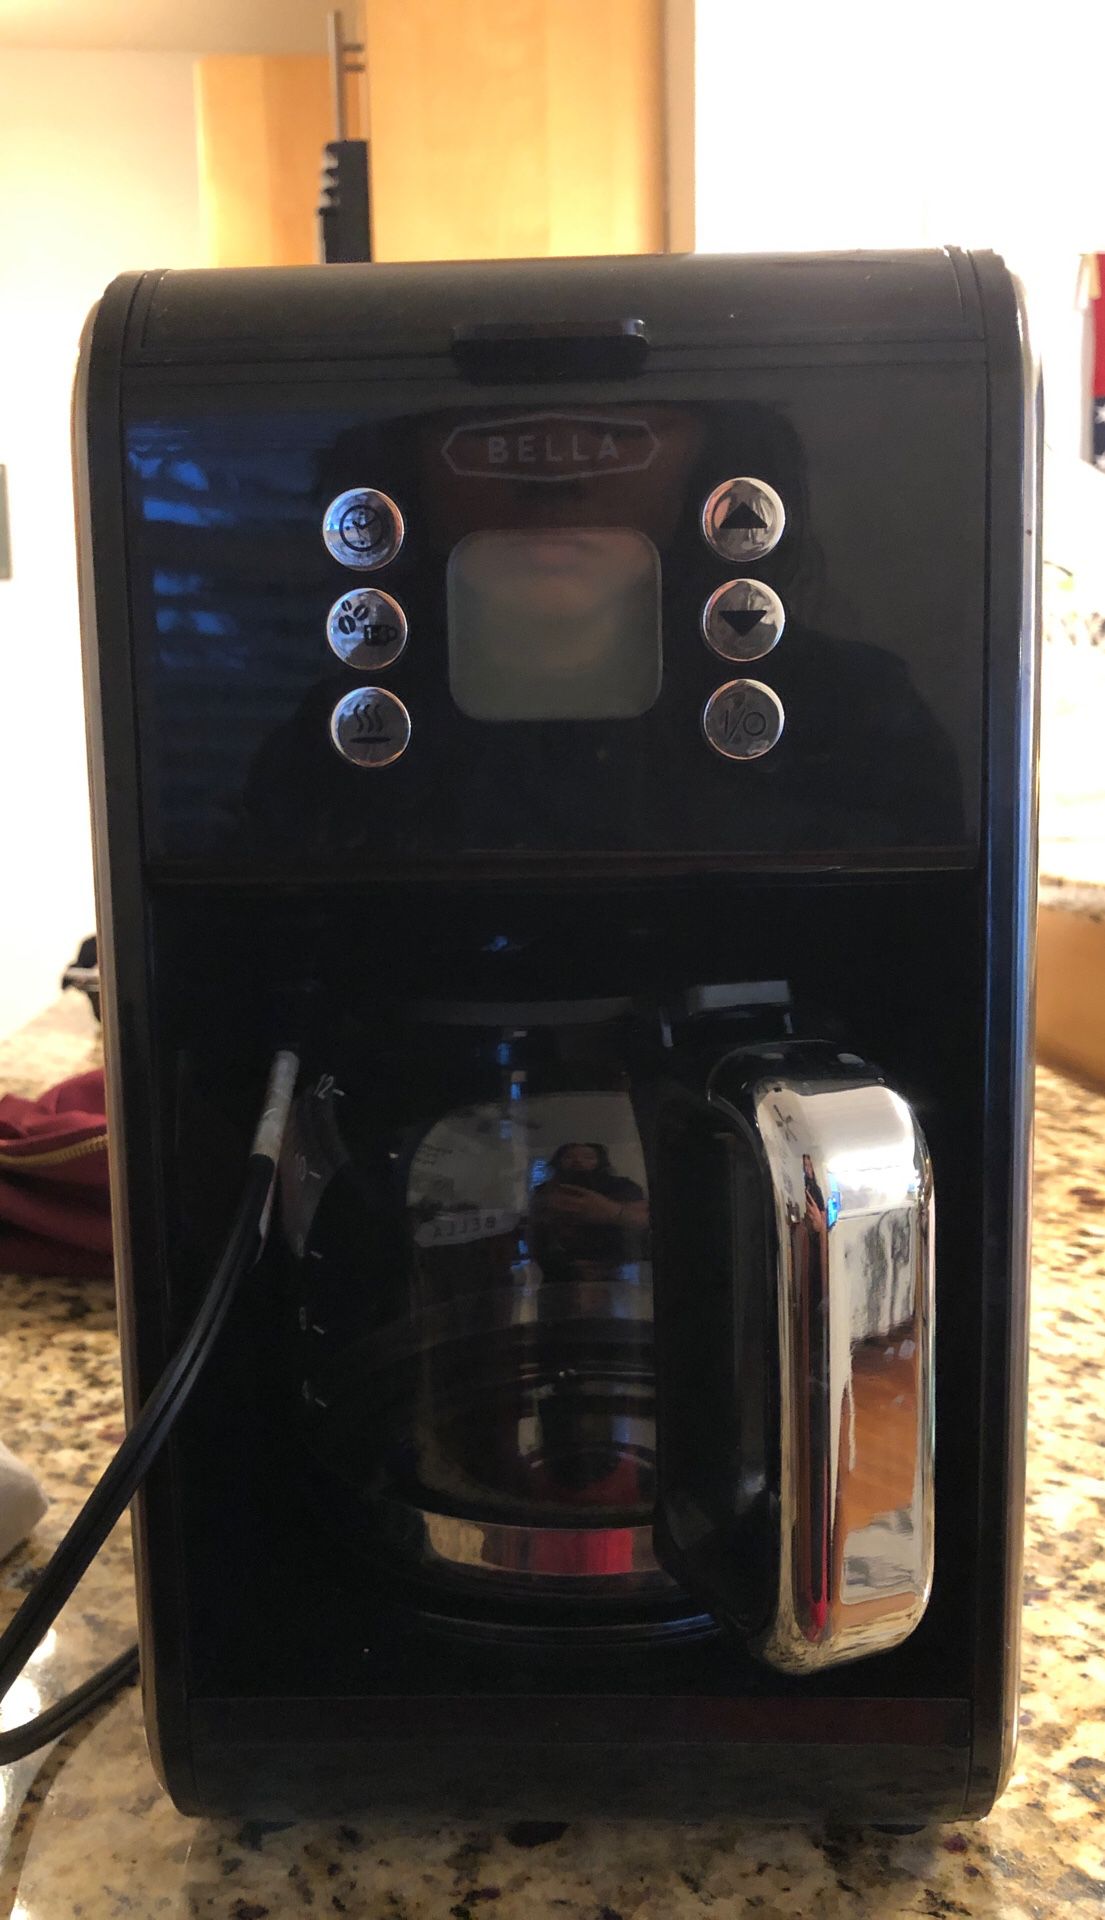 Bella 12-Cup Coffee Maker